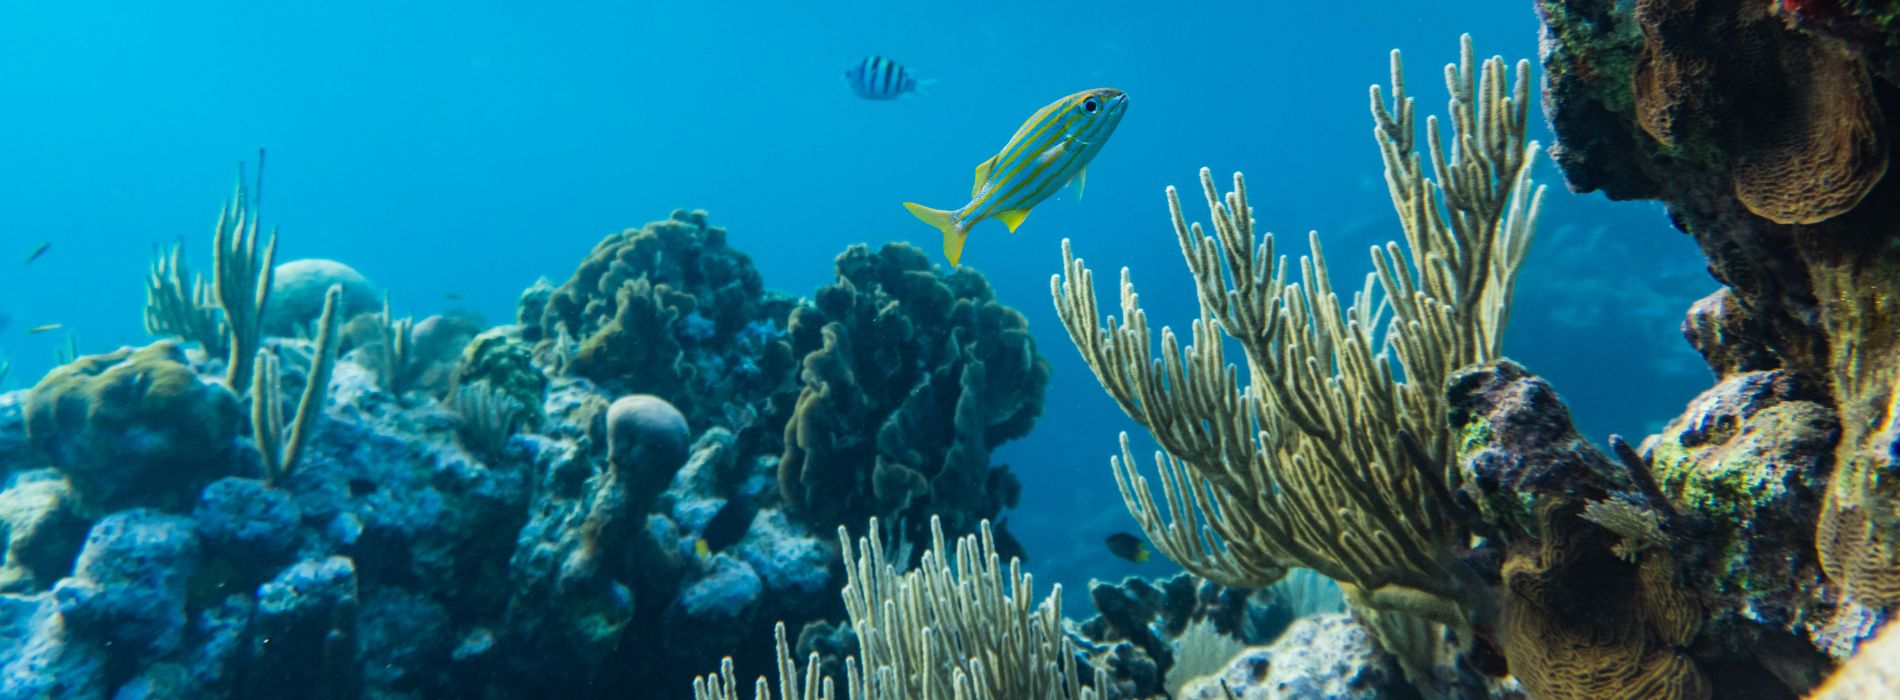 underwater-coral-view